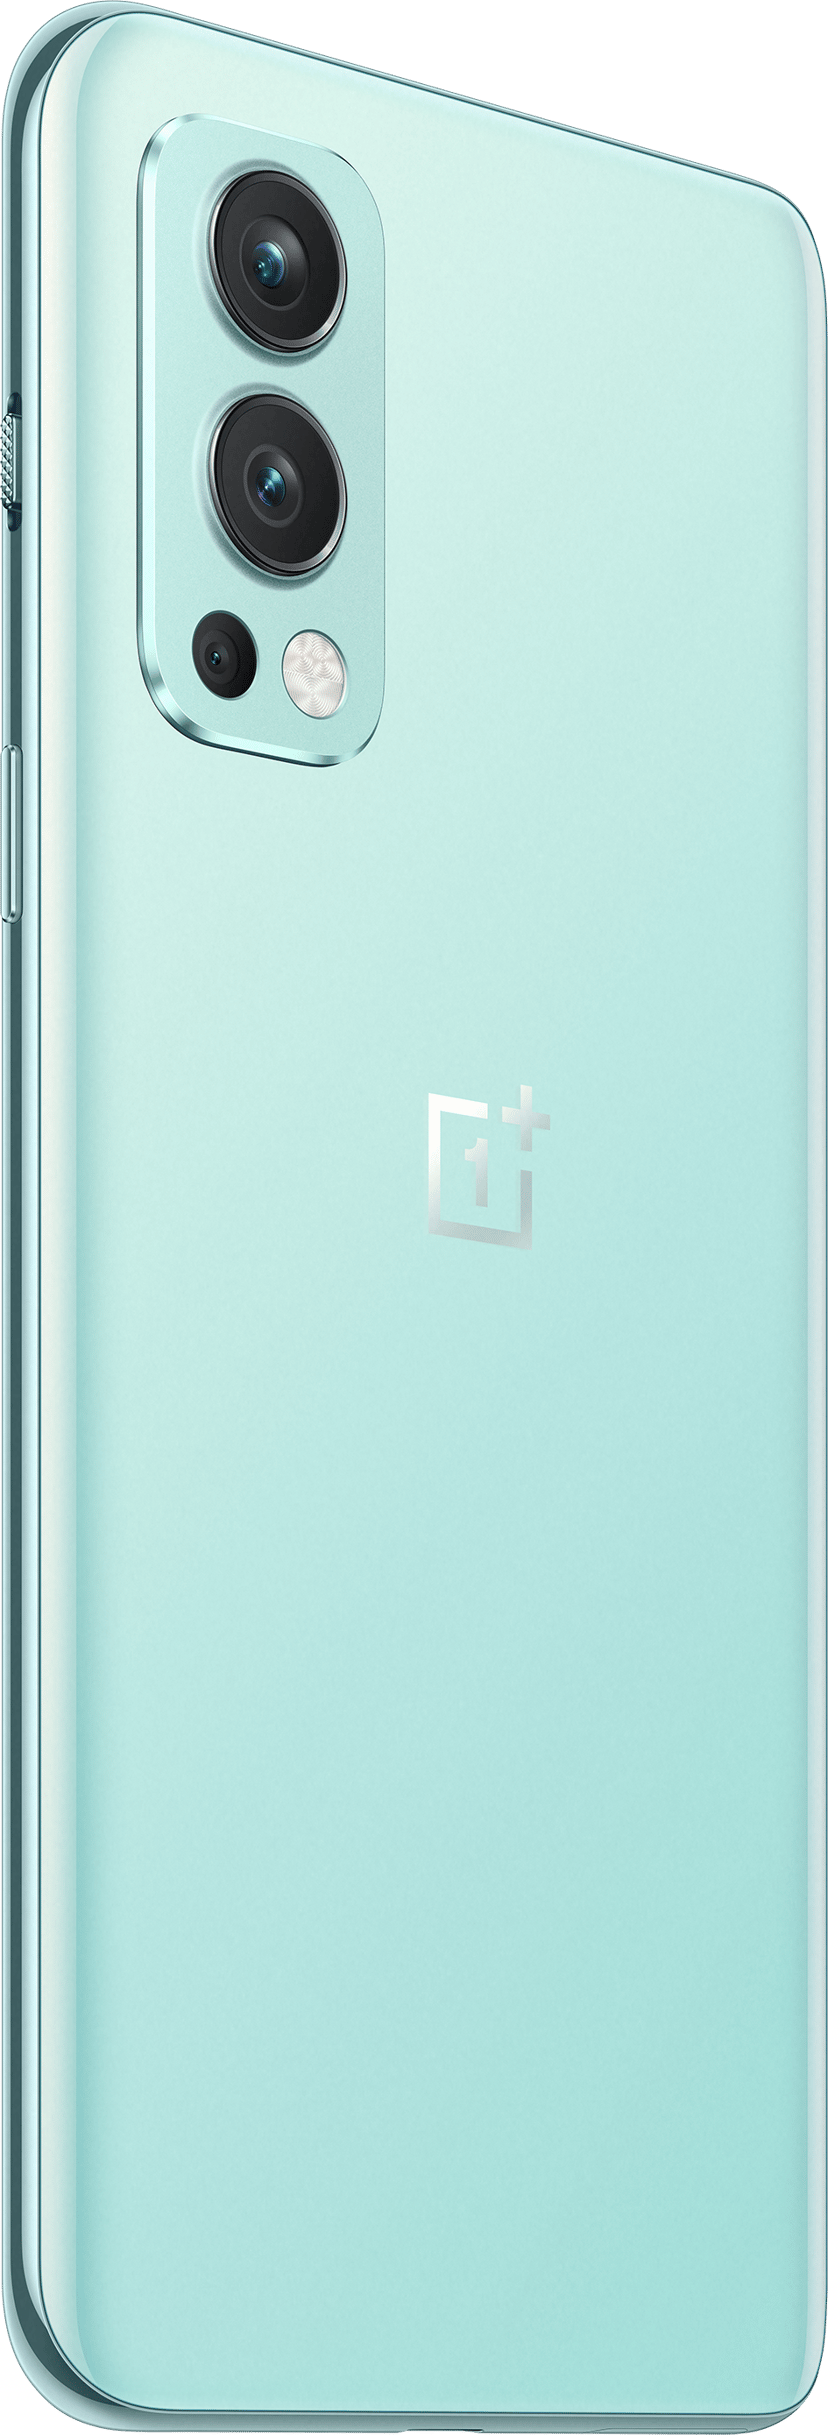 OnePlus Nord 2 128GB Dual-SIM Blue haze